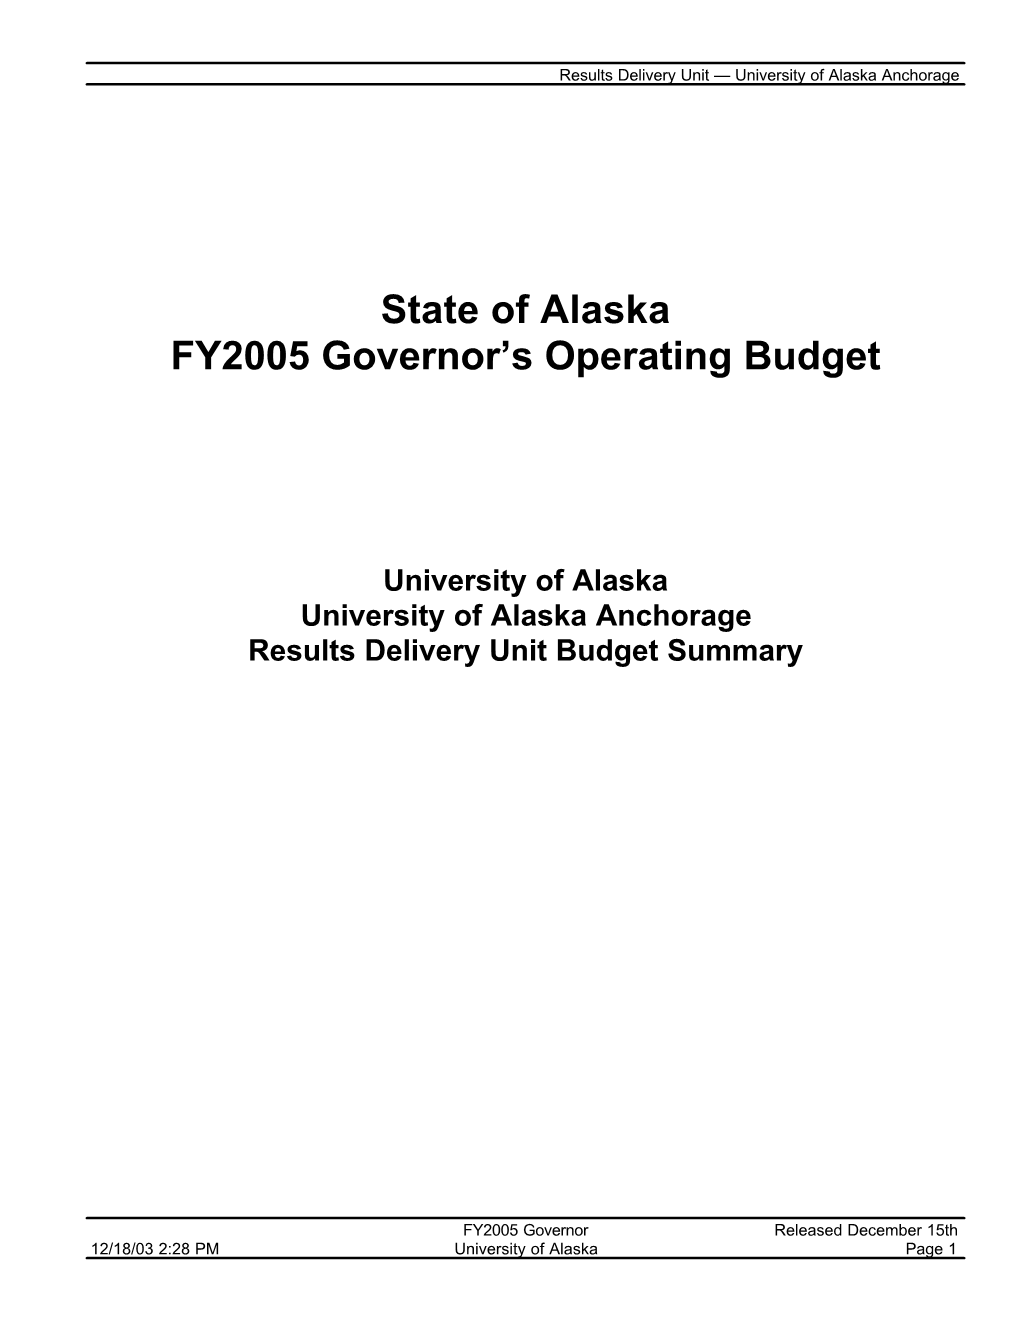 State of Alaska FY2005 Governor's Operating Budget